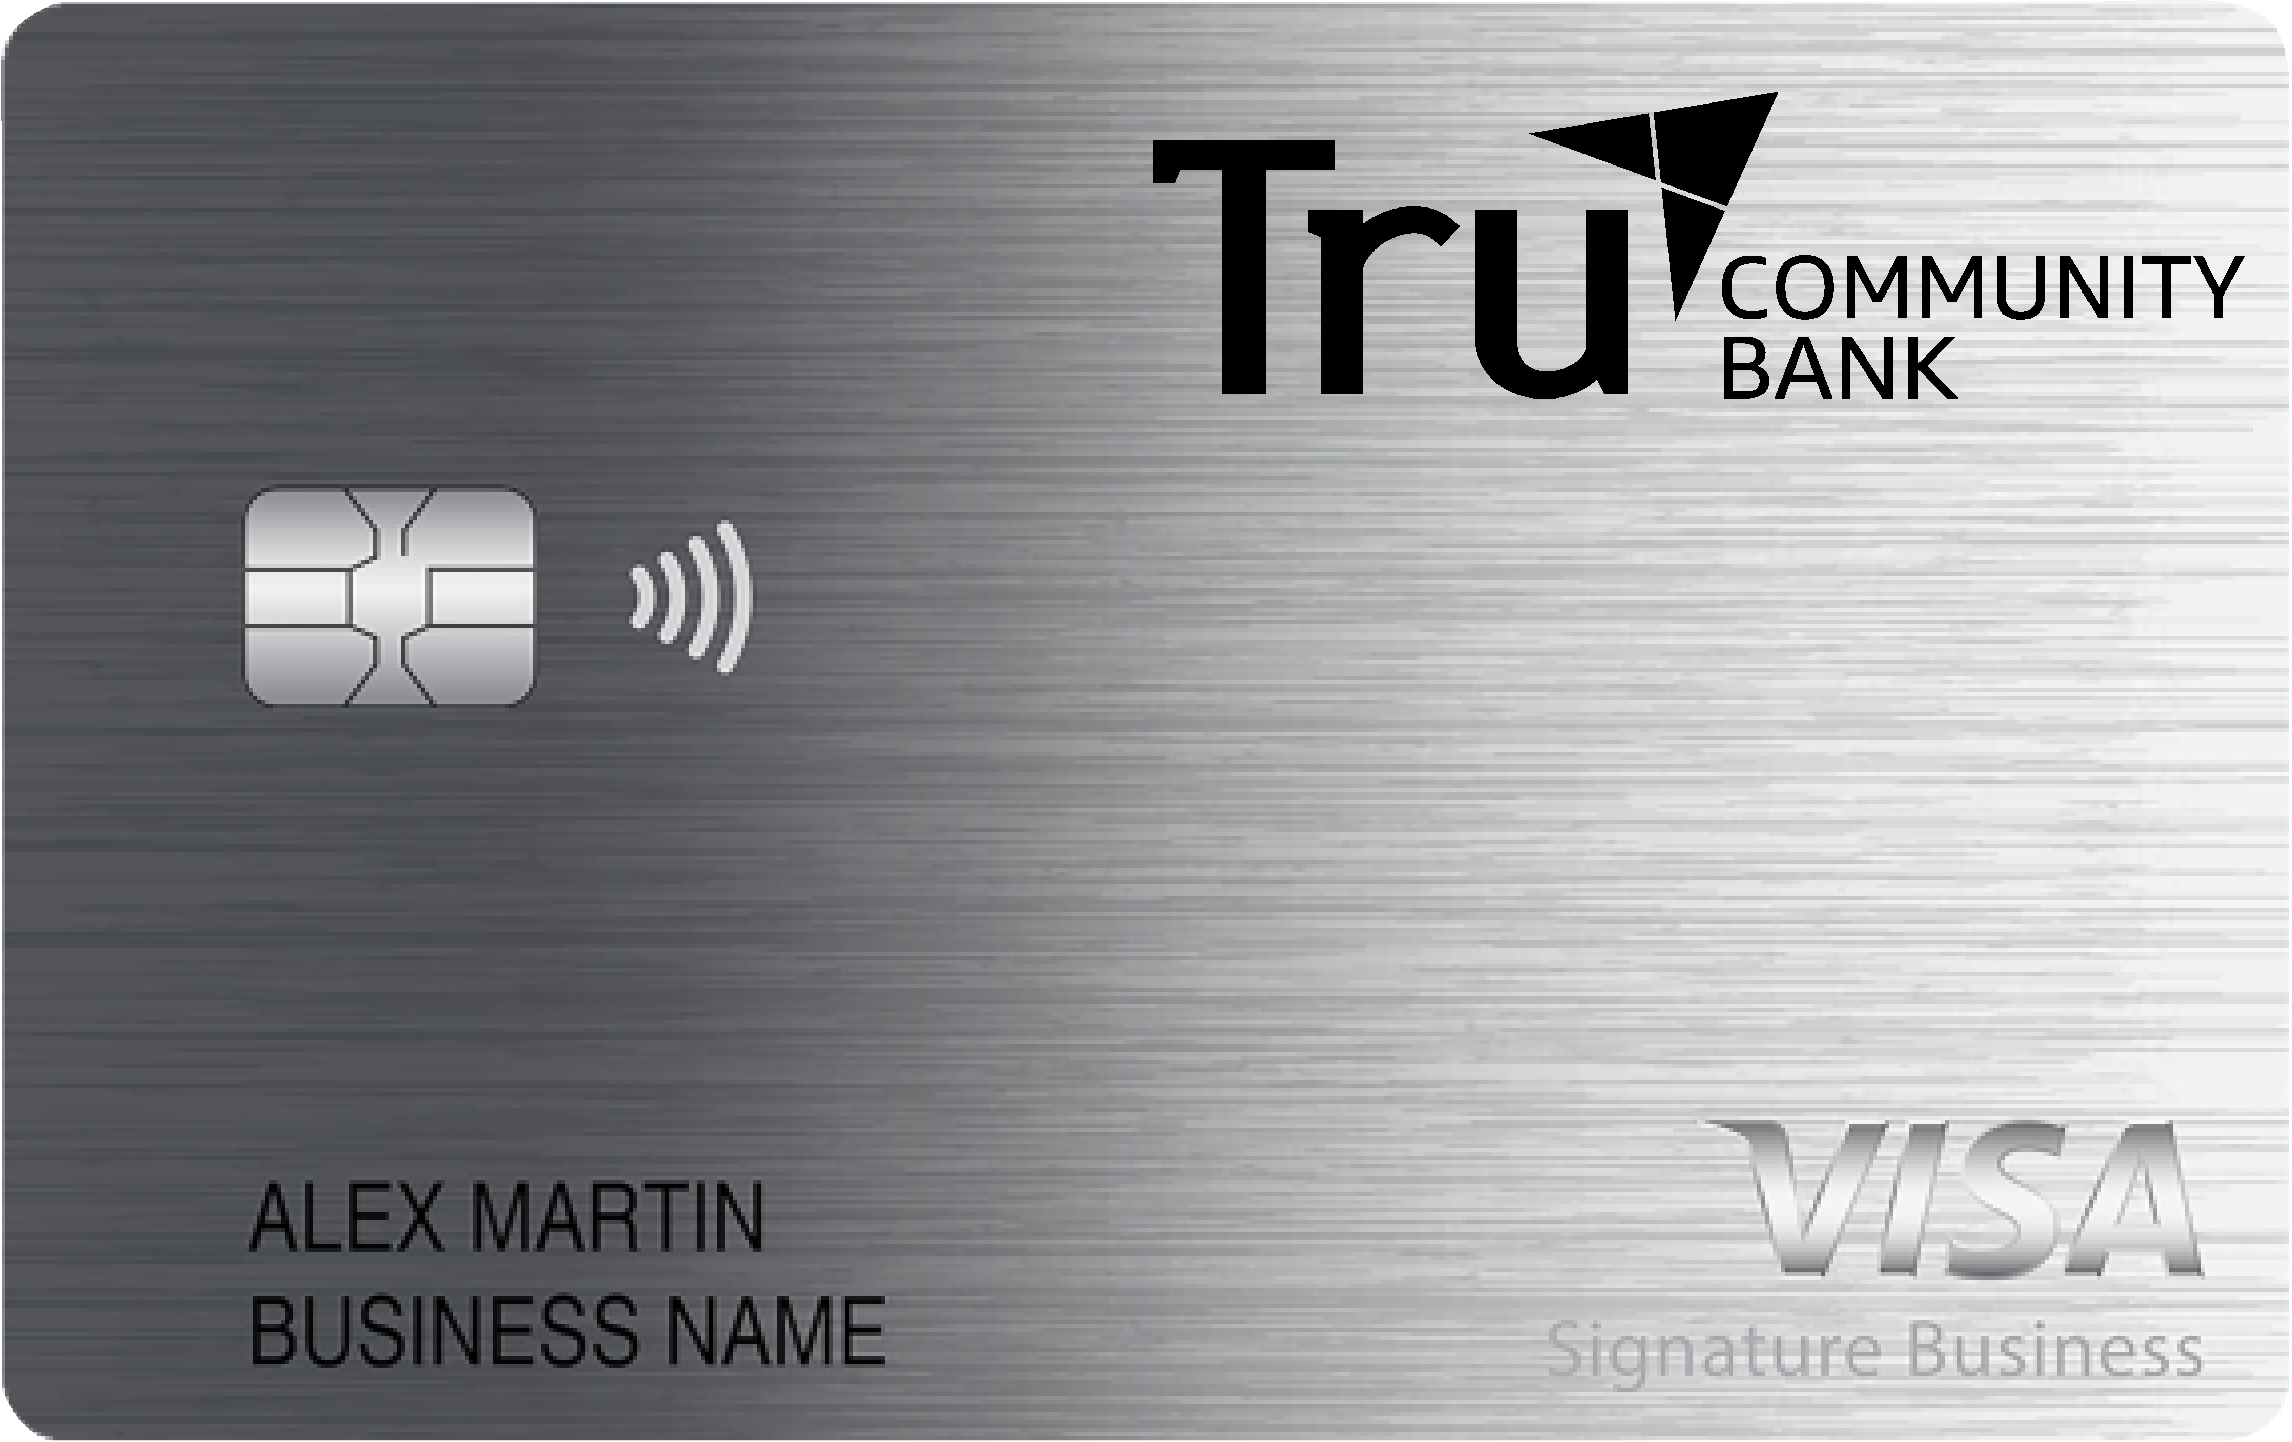 TruCommunity Bank Smart Business Rewards Card